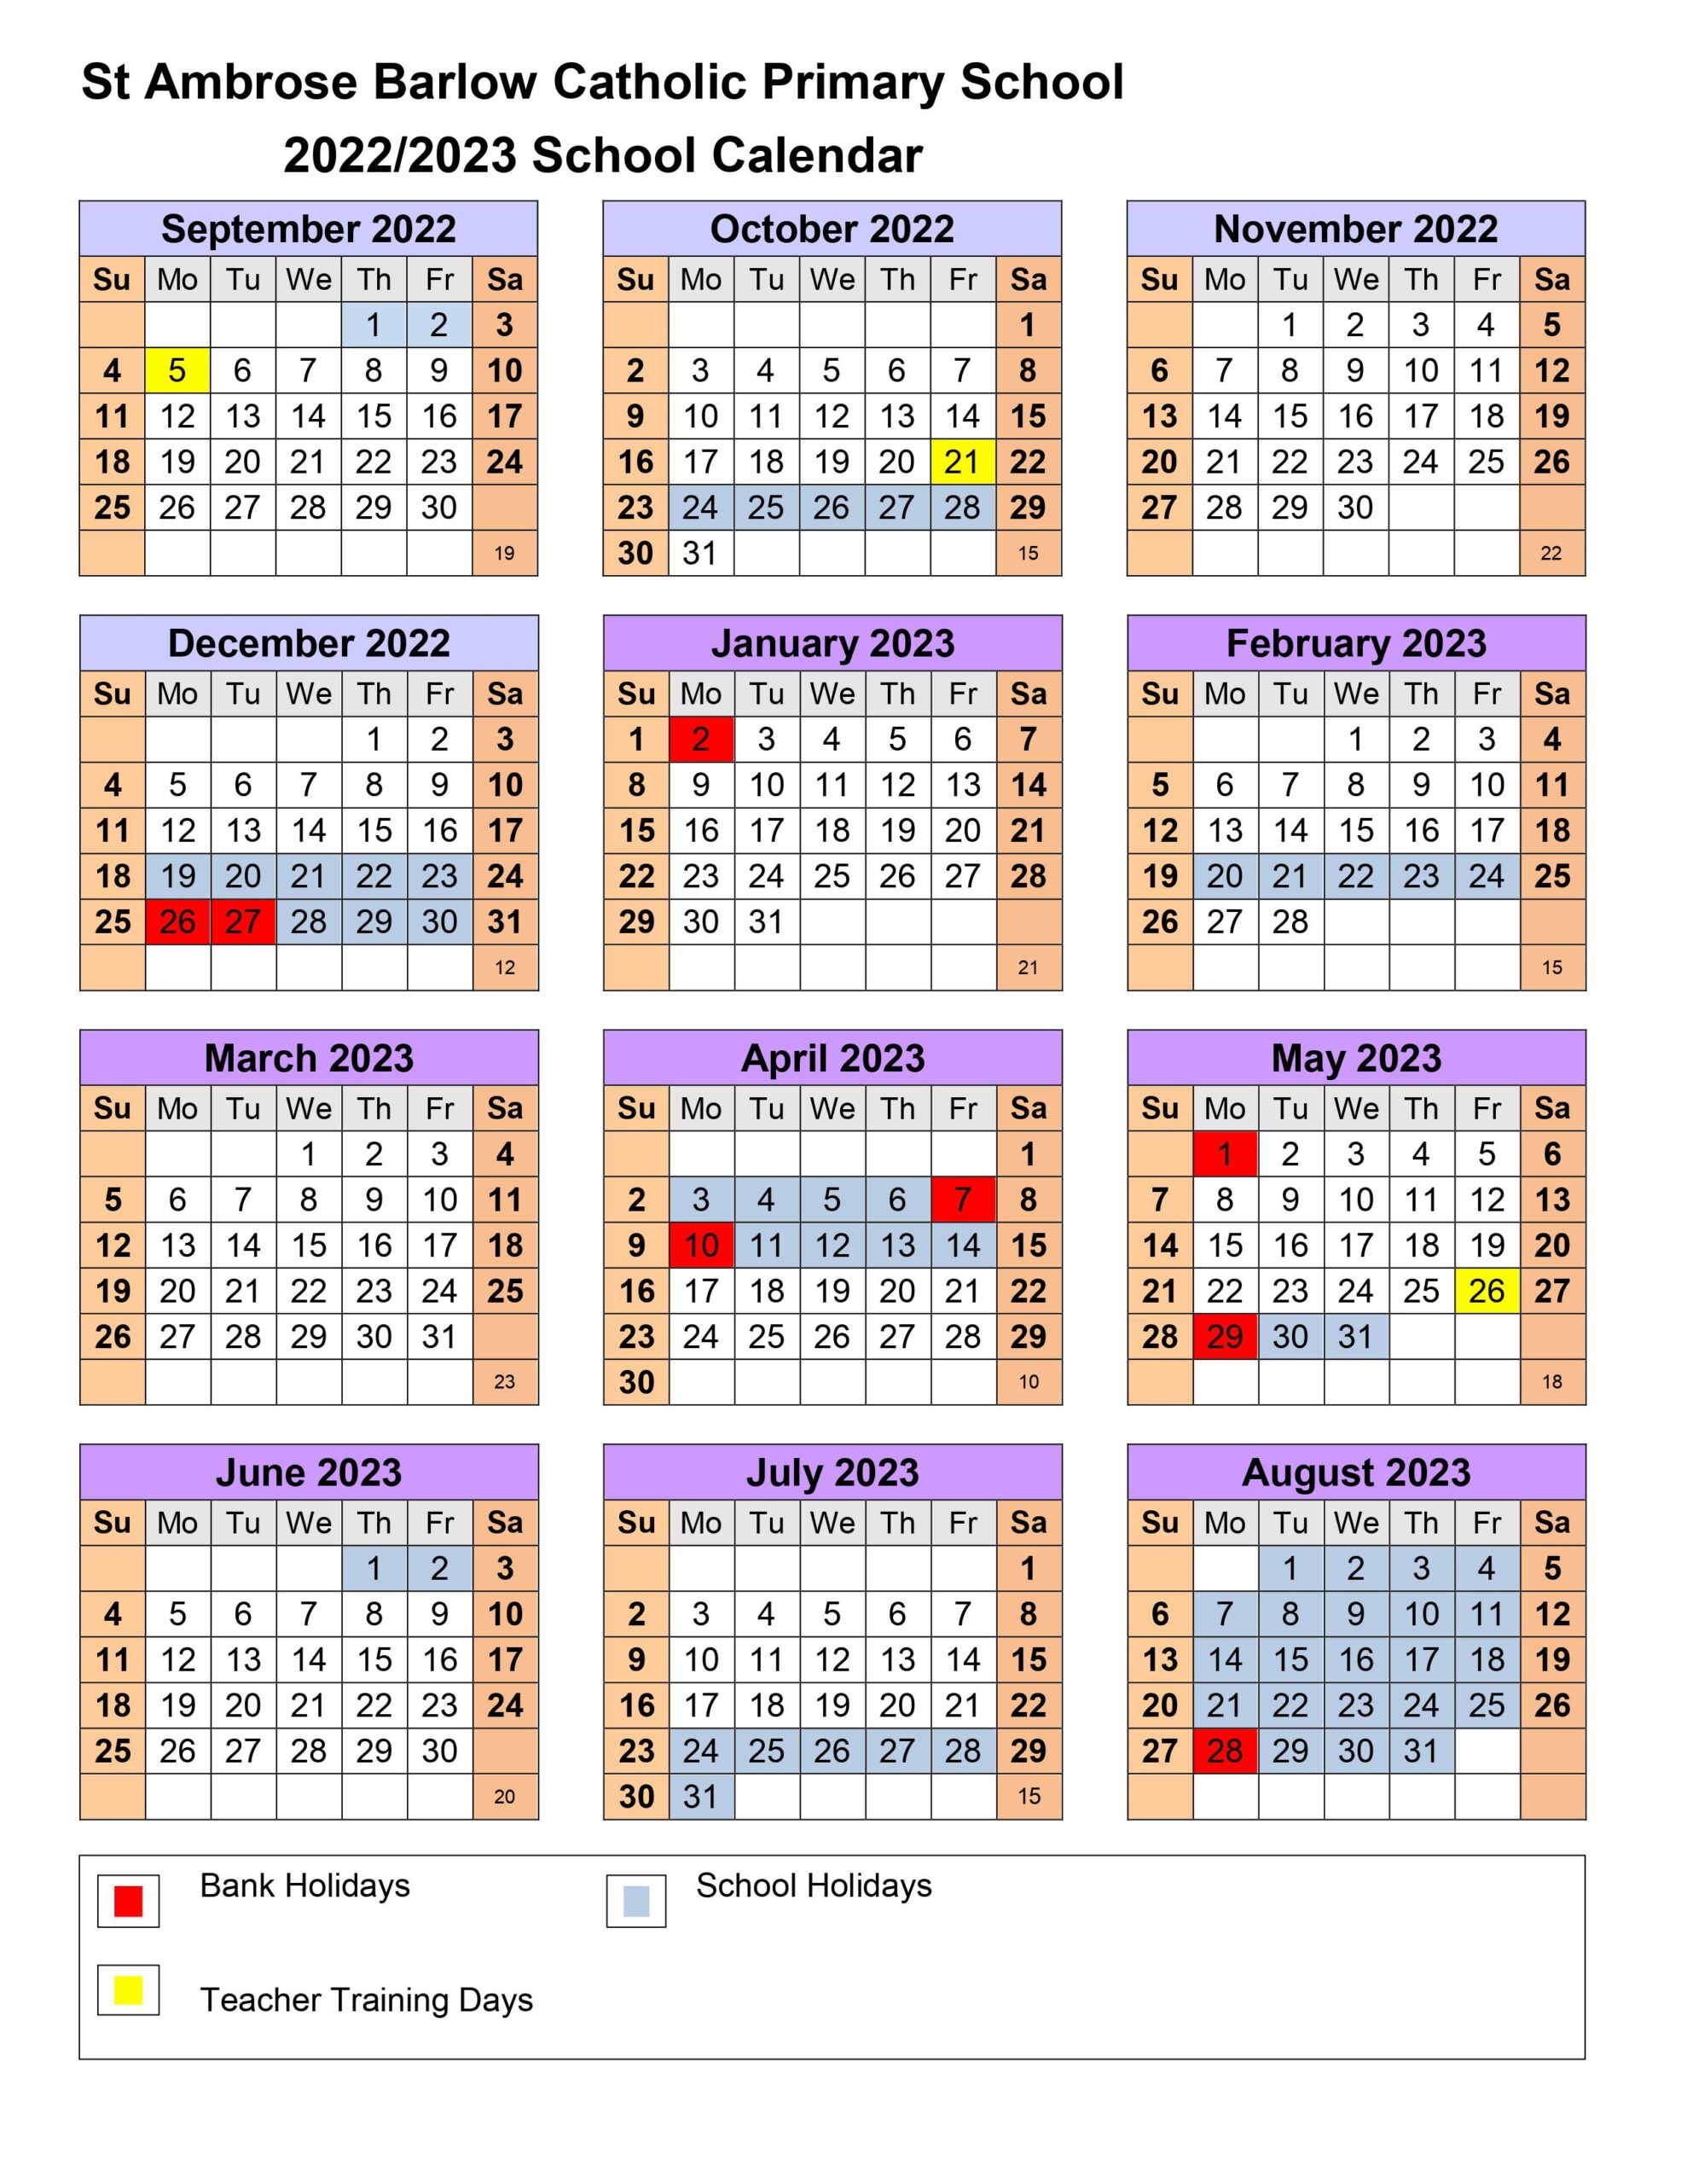 greensboro-college-academic-calendar